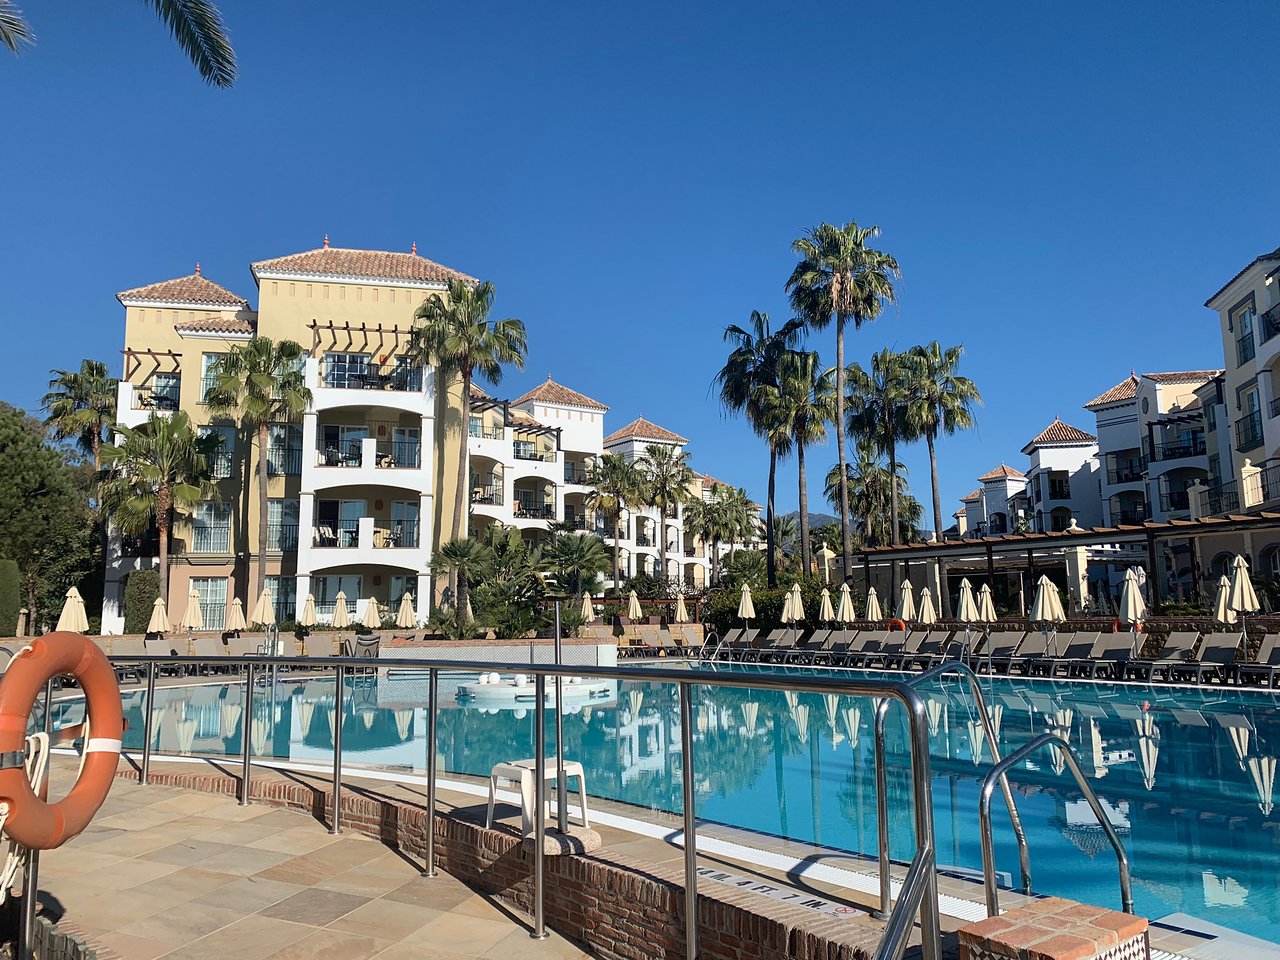 Marriott's Playa Andaluza Exterior Pool